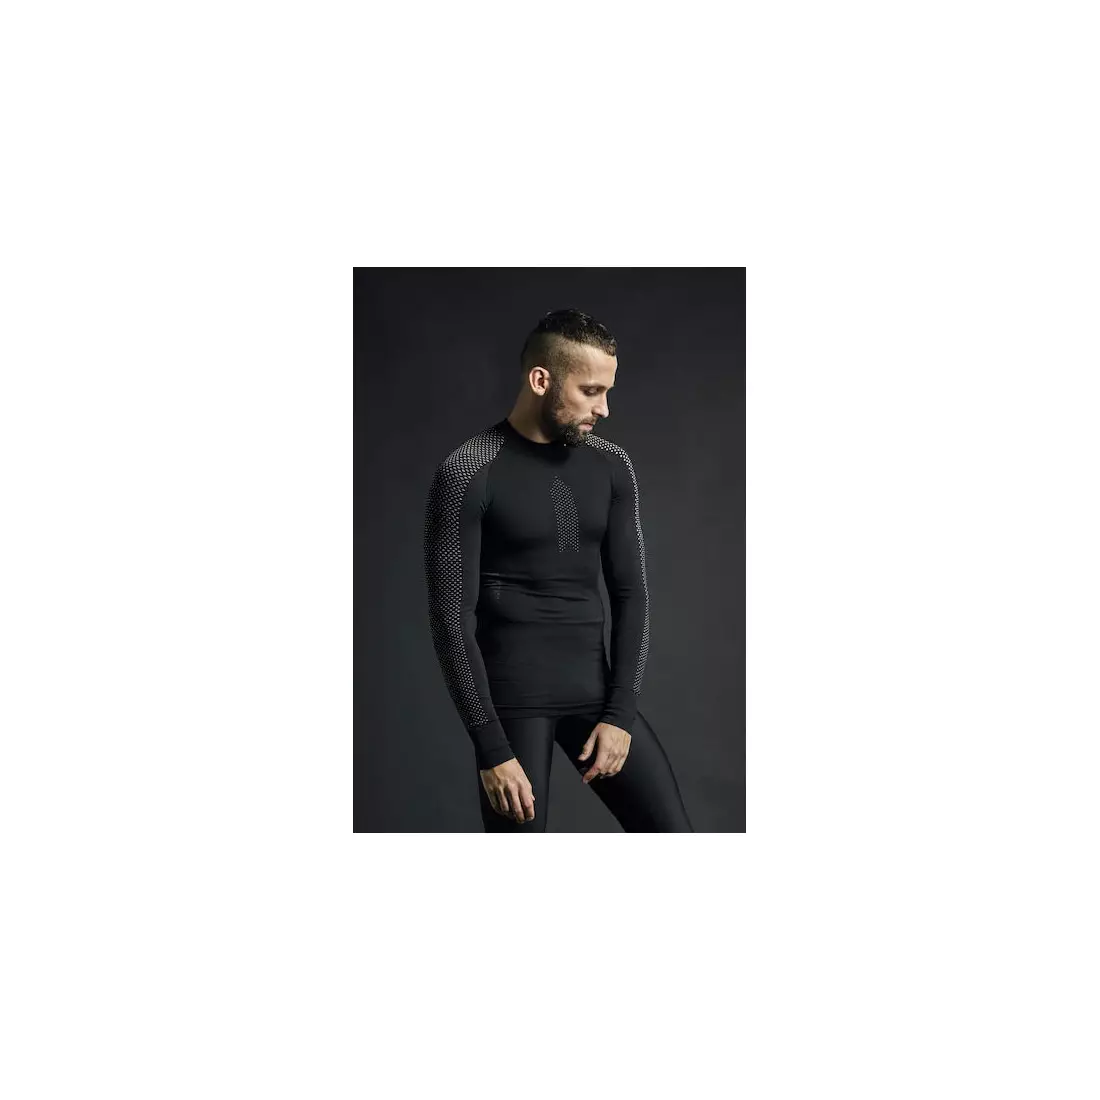 Tricou pentru bărbați CRAFT WARM INTENSITY, negru 1905350-999985